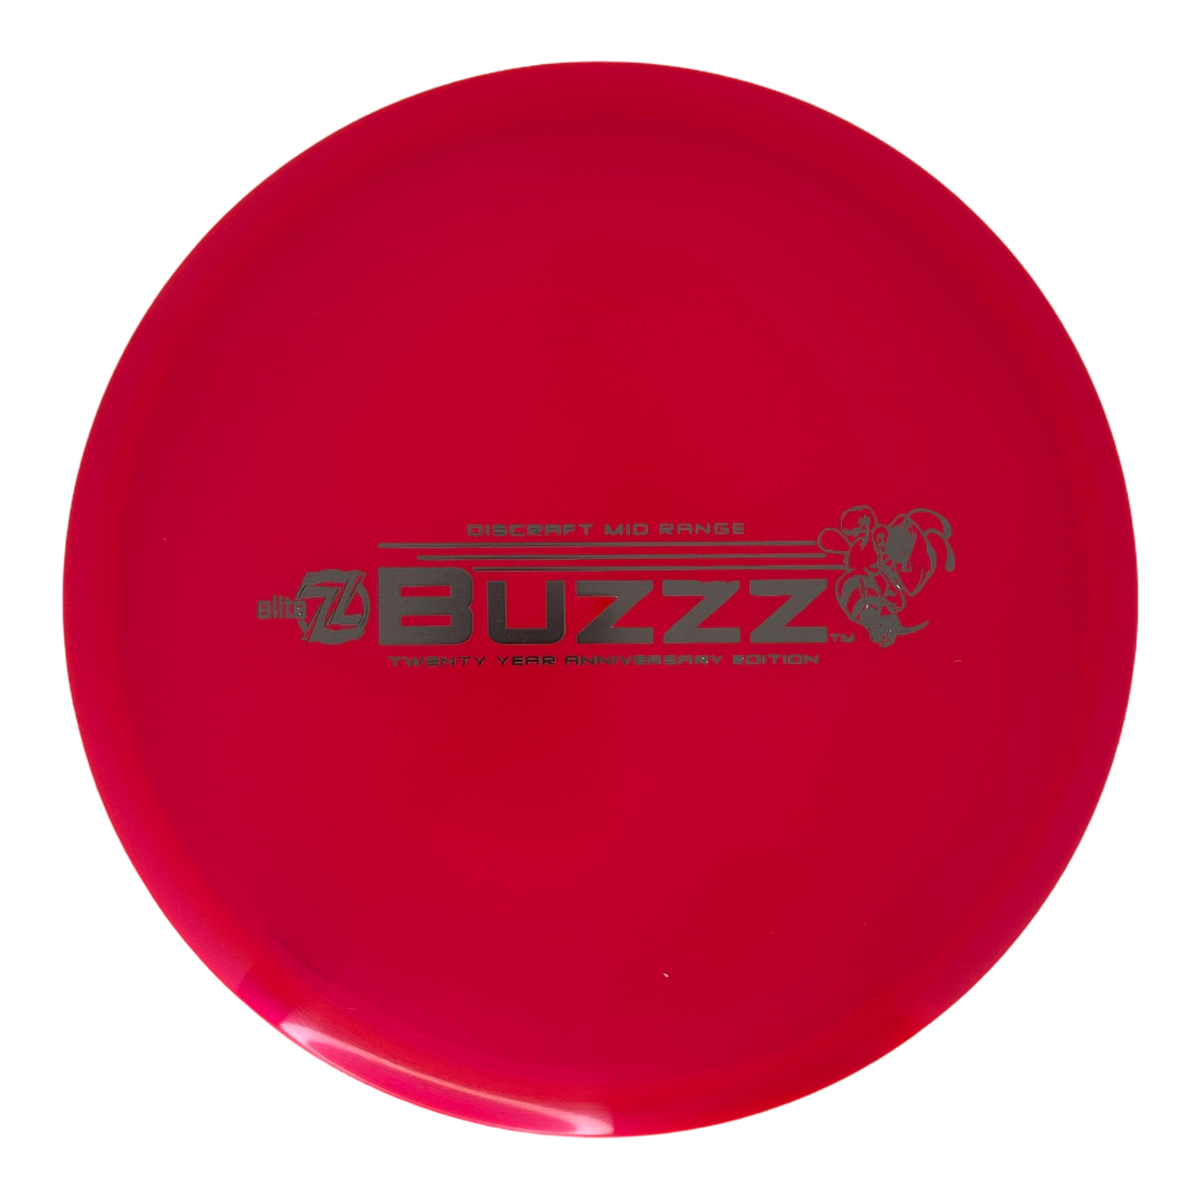 Discraft Elite Z Buzzz - Twenty Year Anniversary Edition